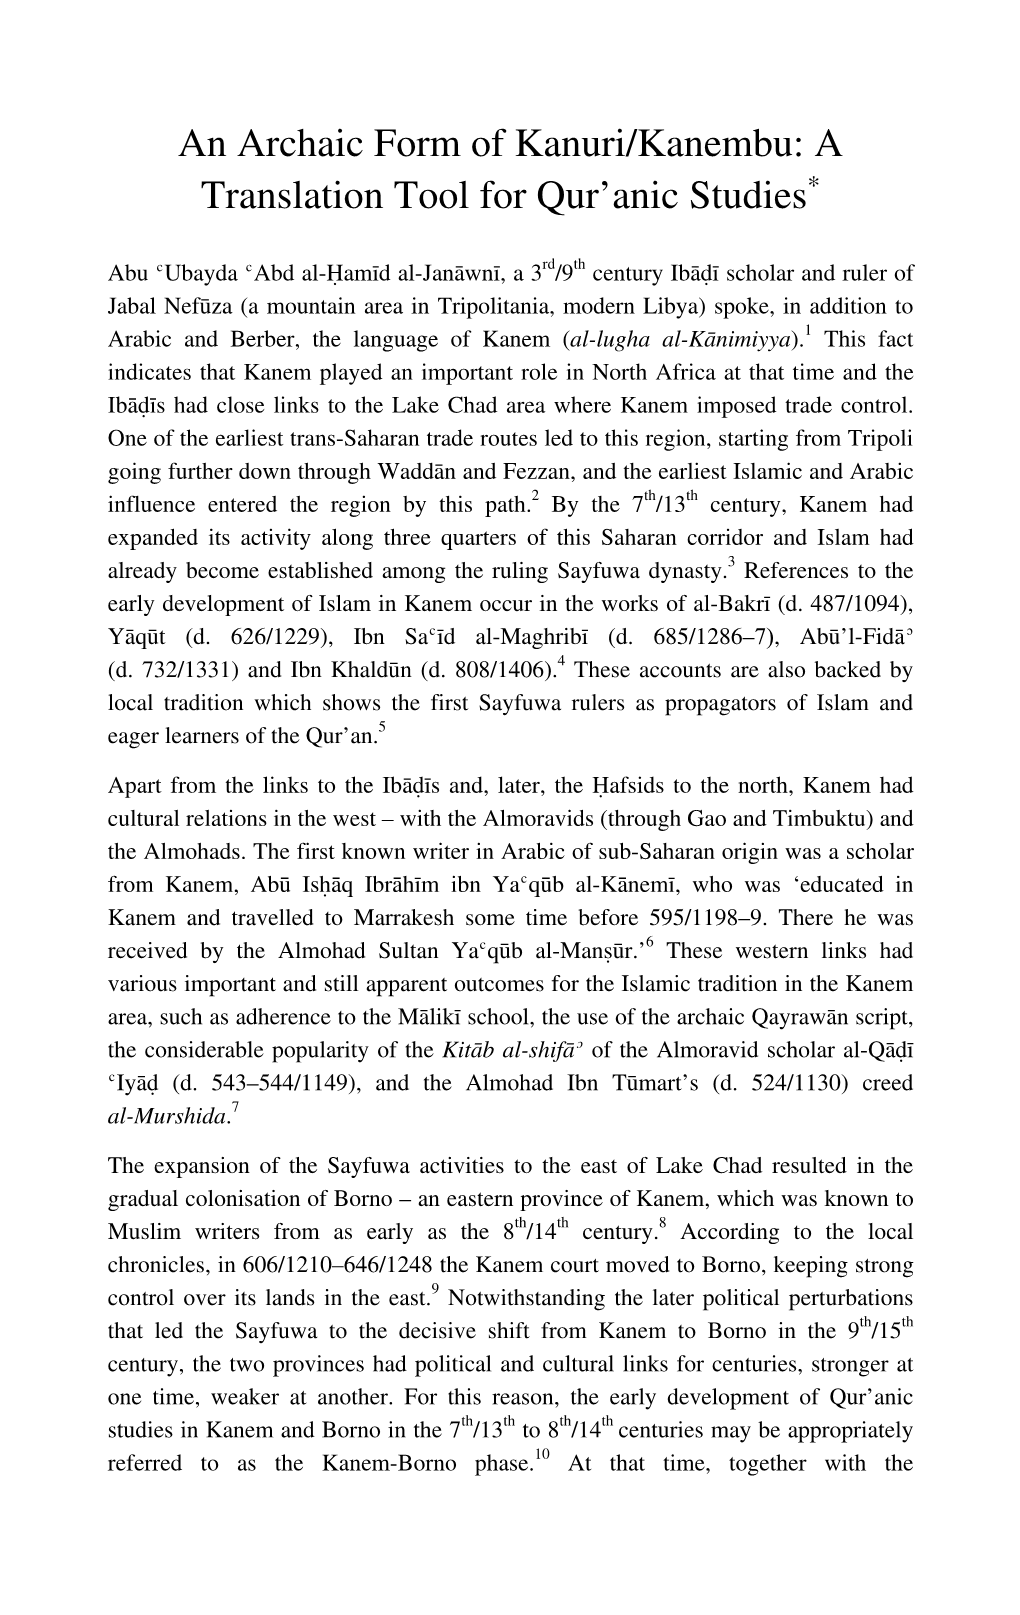 An Archaic Form of Kanuri/Kanembu: a Translation Tool for Qur'anic